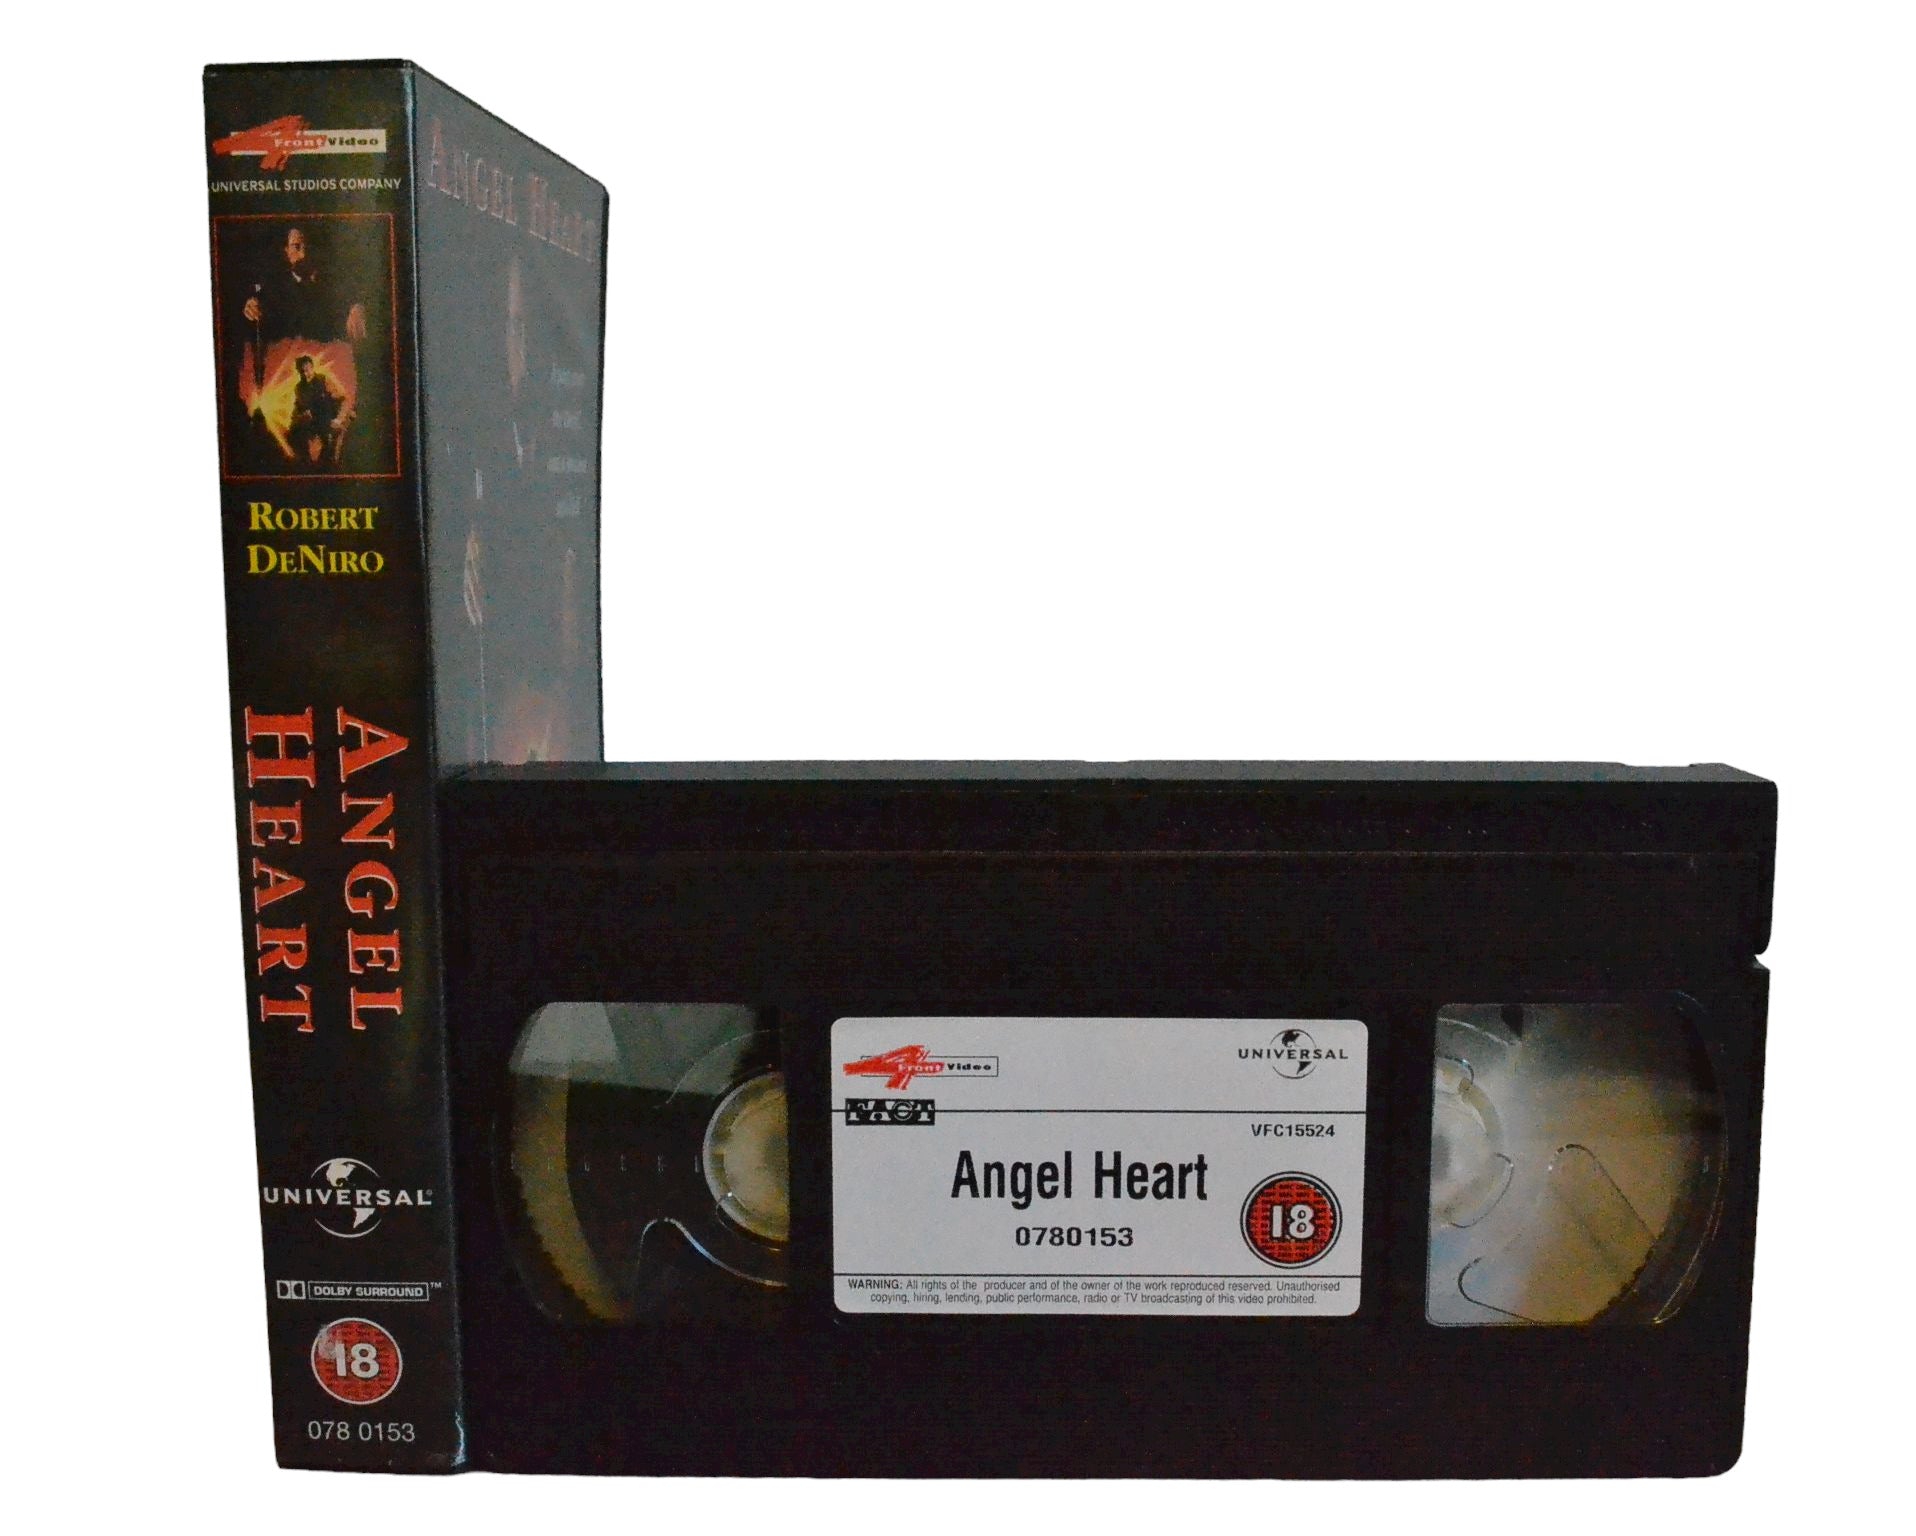 Angel Heart - Mickey Rourke - 4 Front Video - Horror - Pal - VHS-